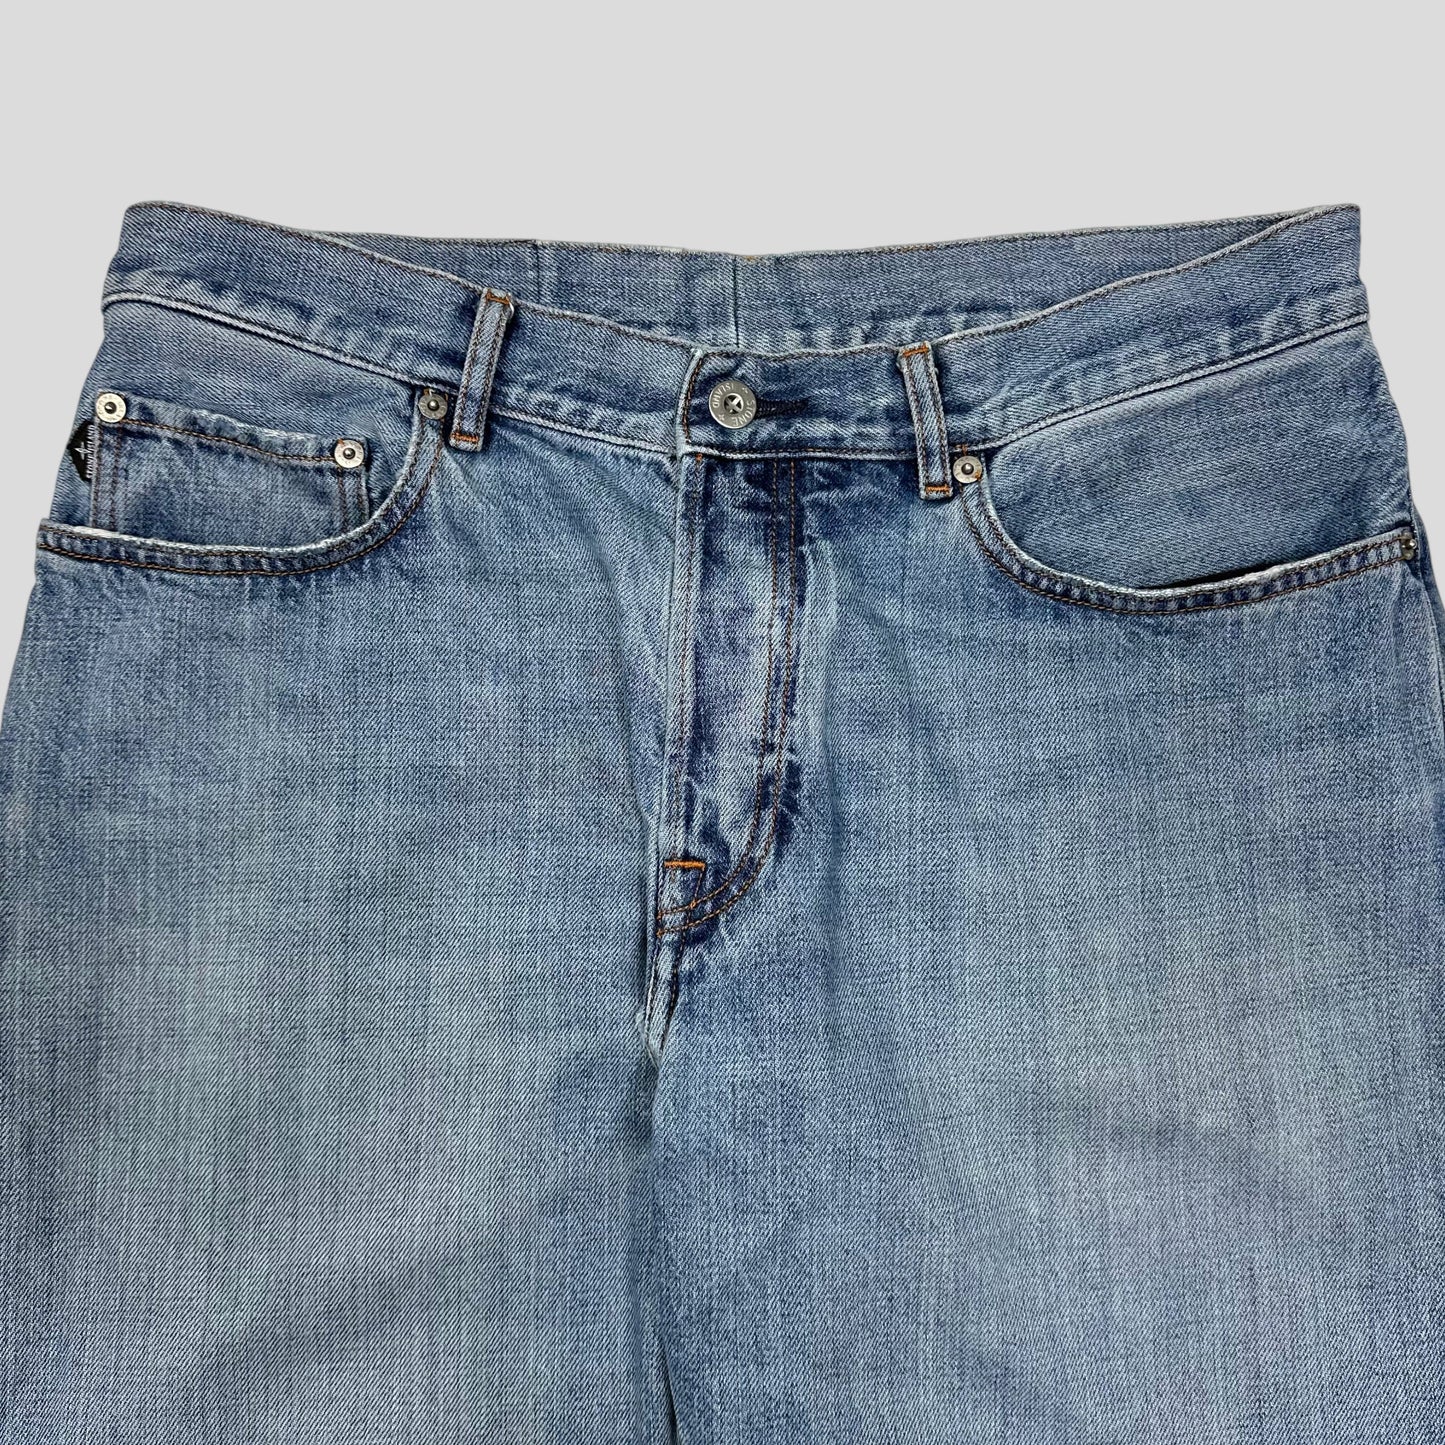 Stone Island SS13 Light Blue Wash Jeans - 34-36